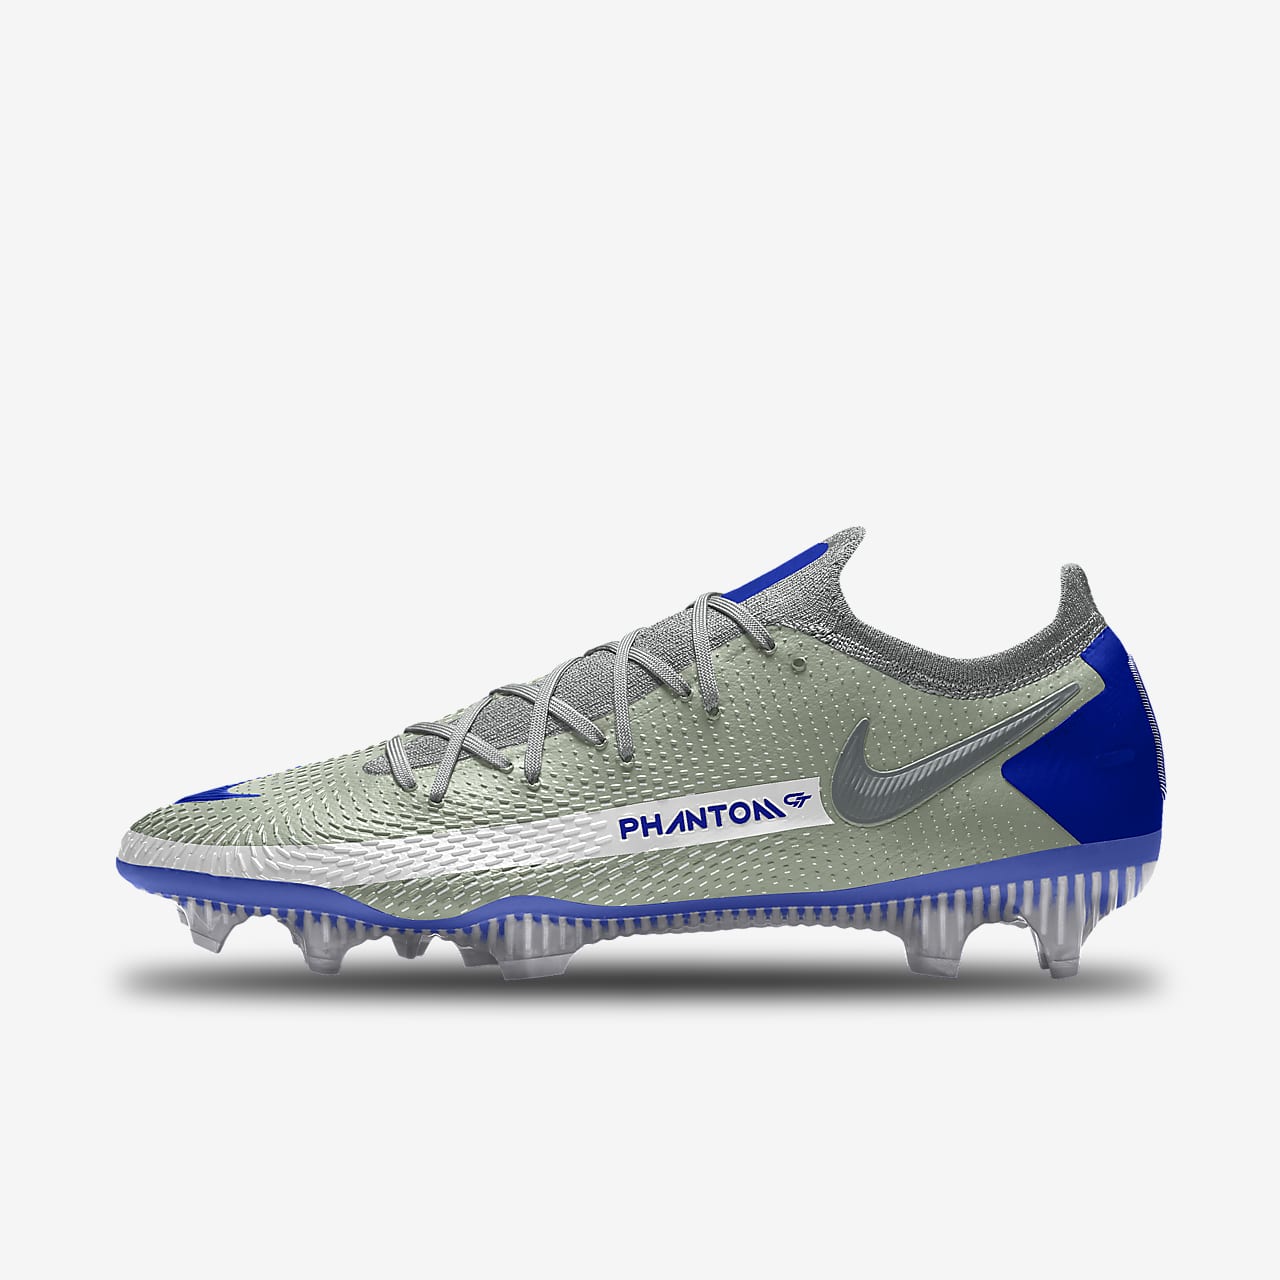 Custom Firm Ground Soccer Cleat. Nike JP